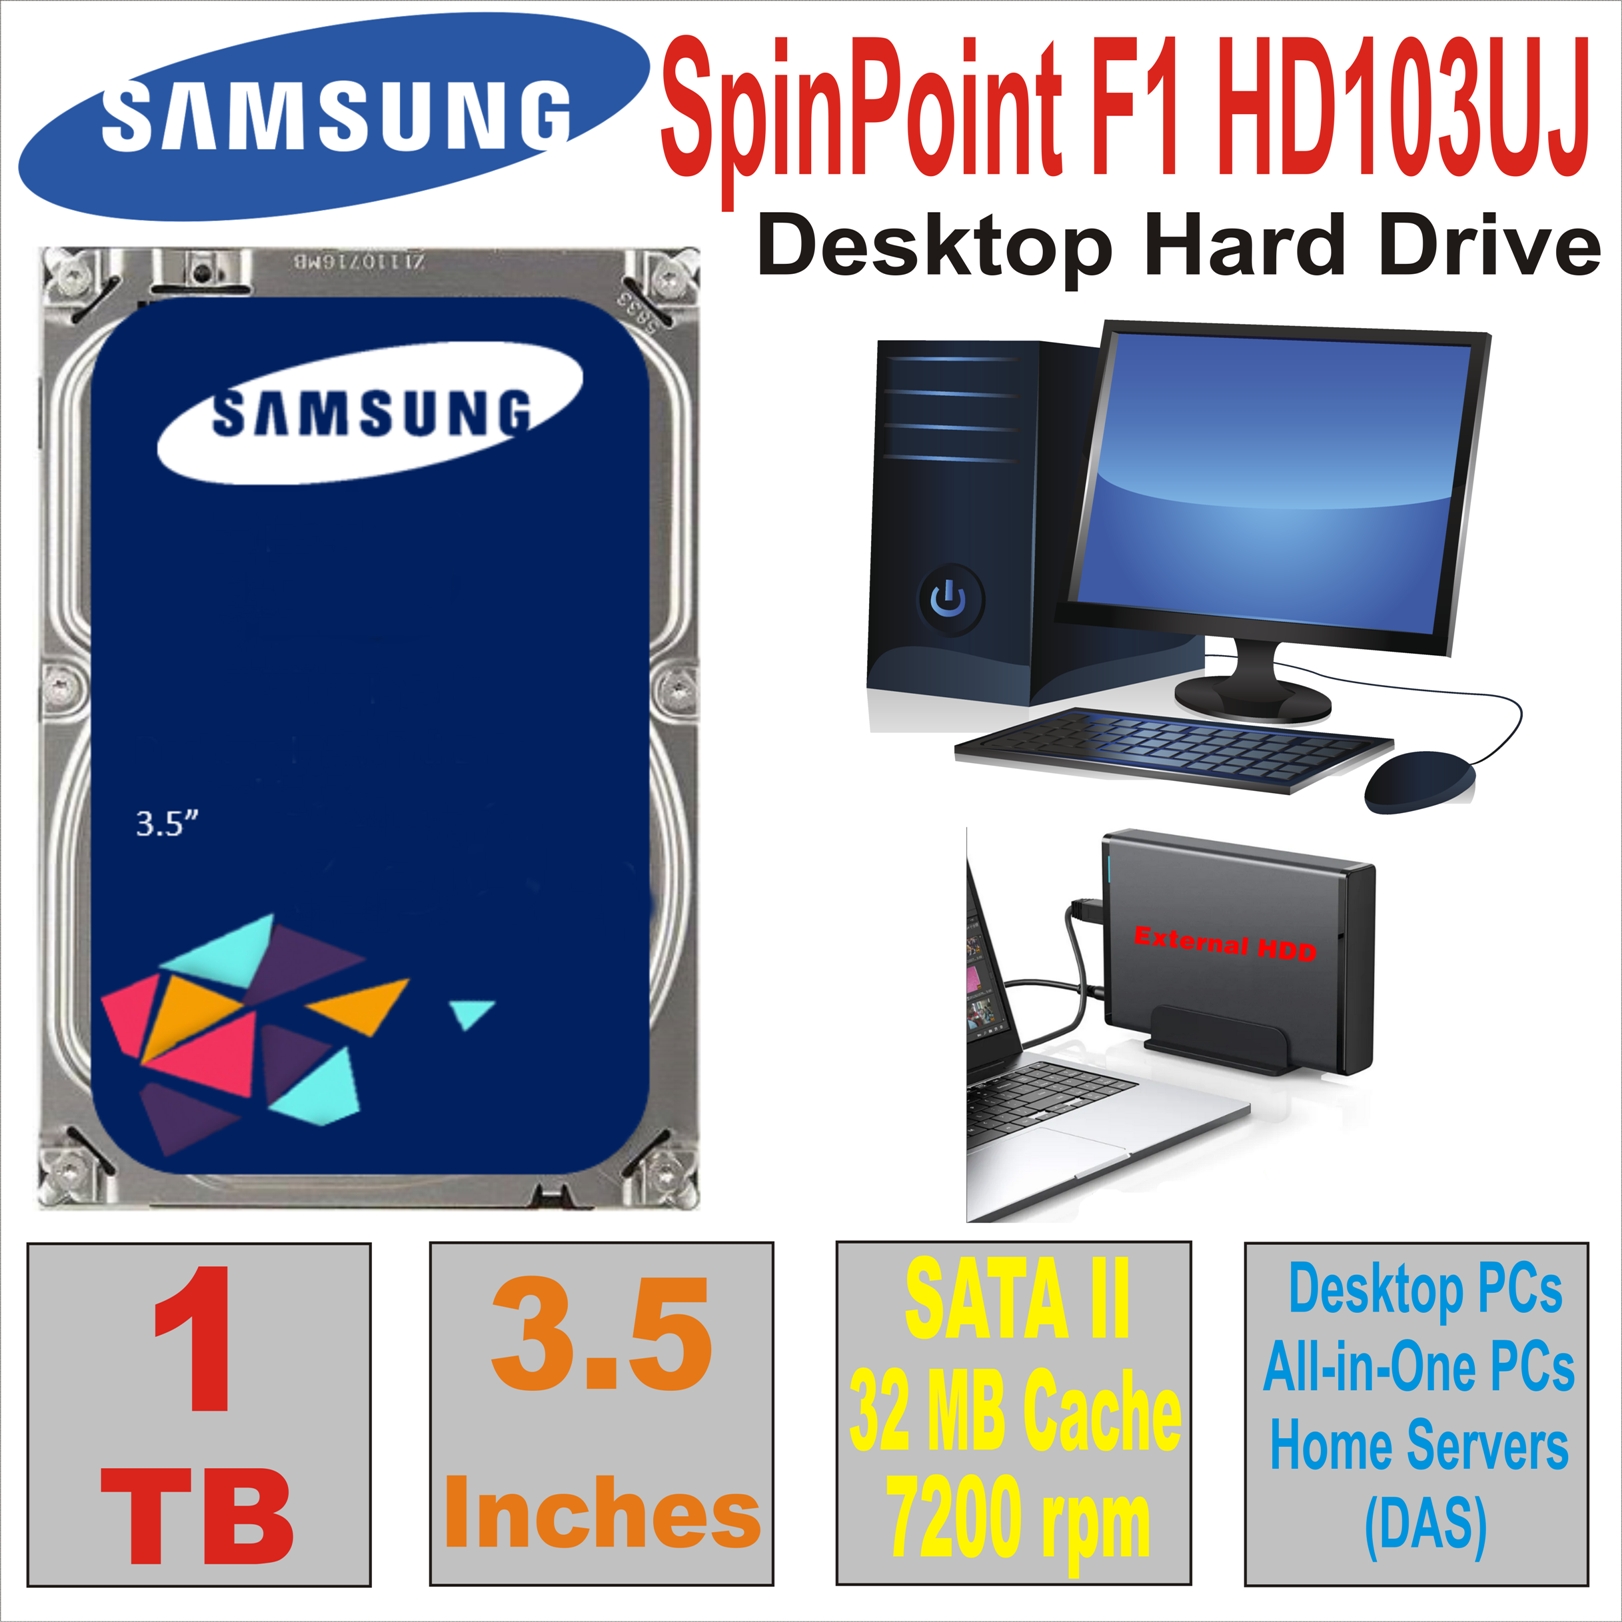 HDD 3.5` 1 TB SAMSUNG SpinPoint F1 HD103UJ